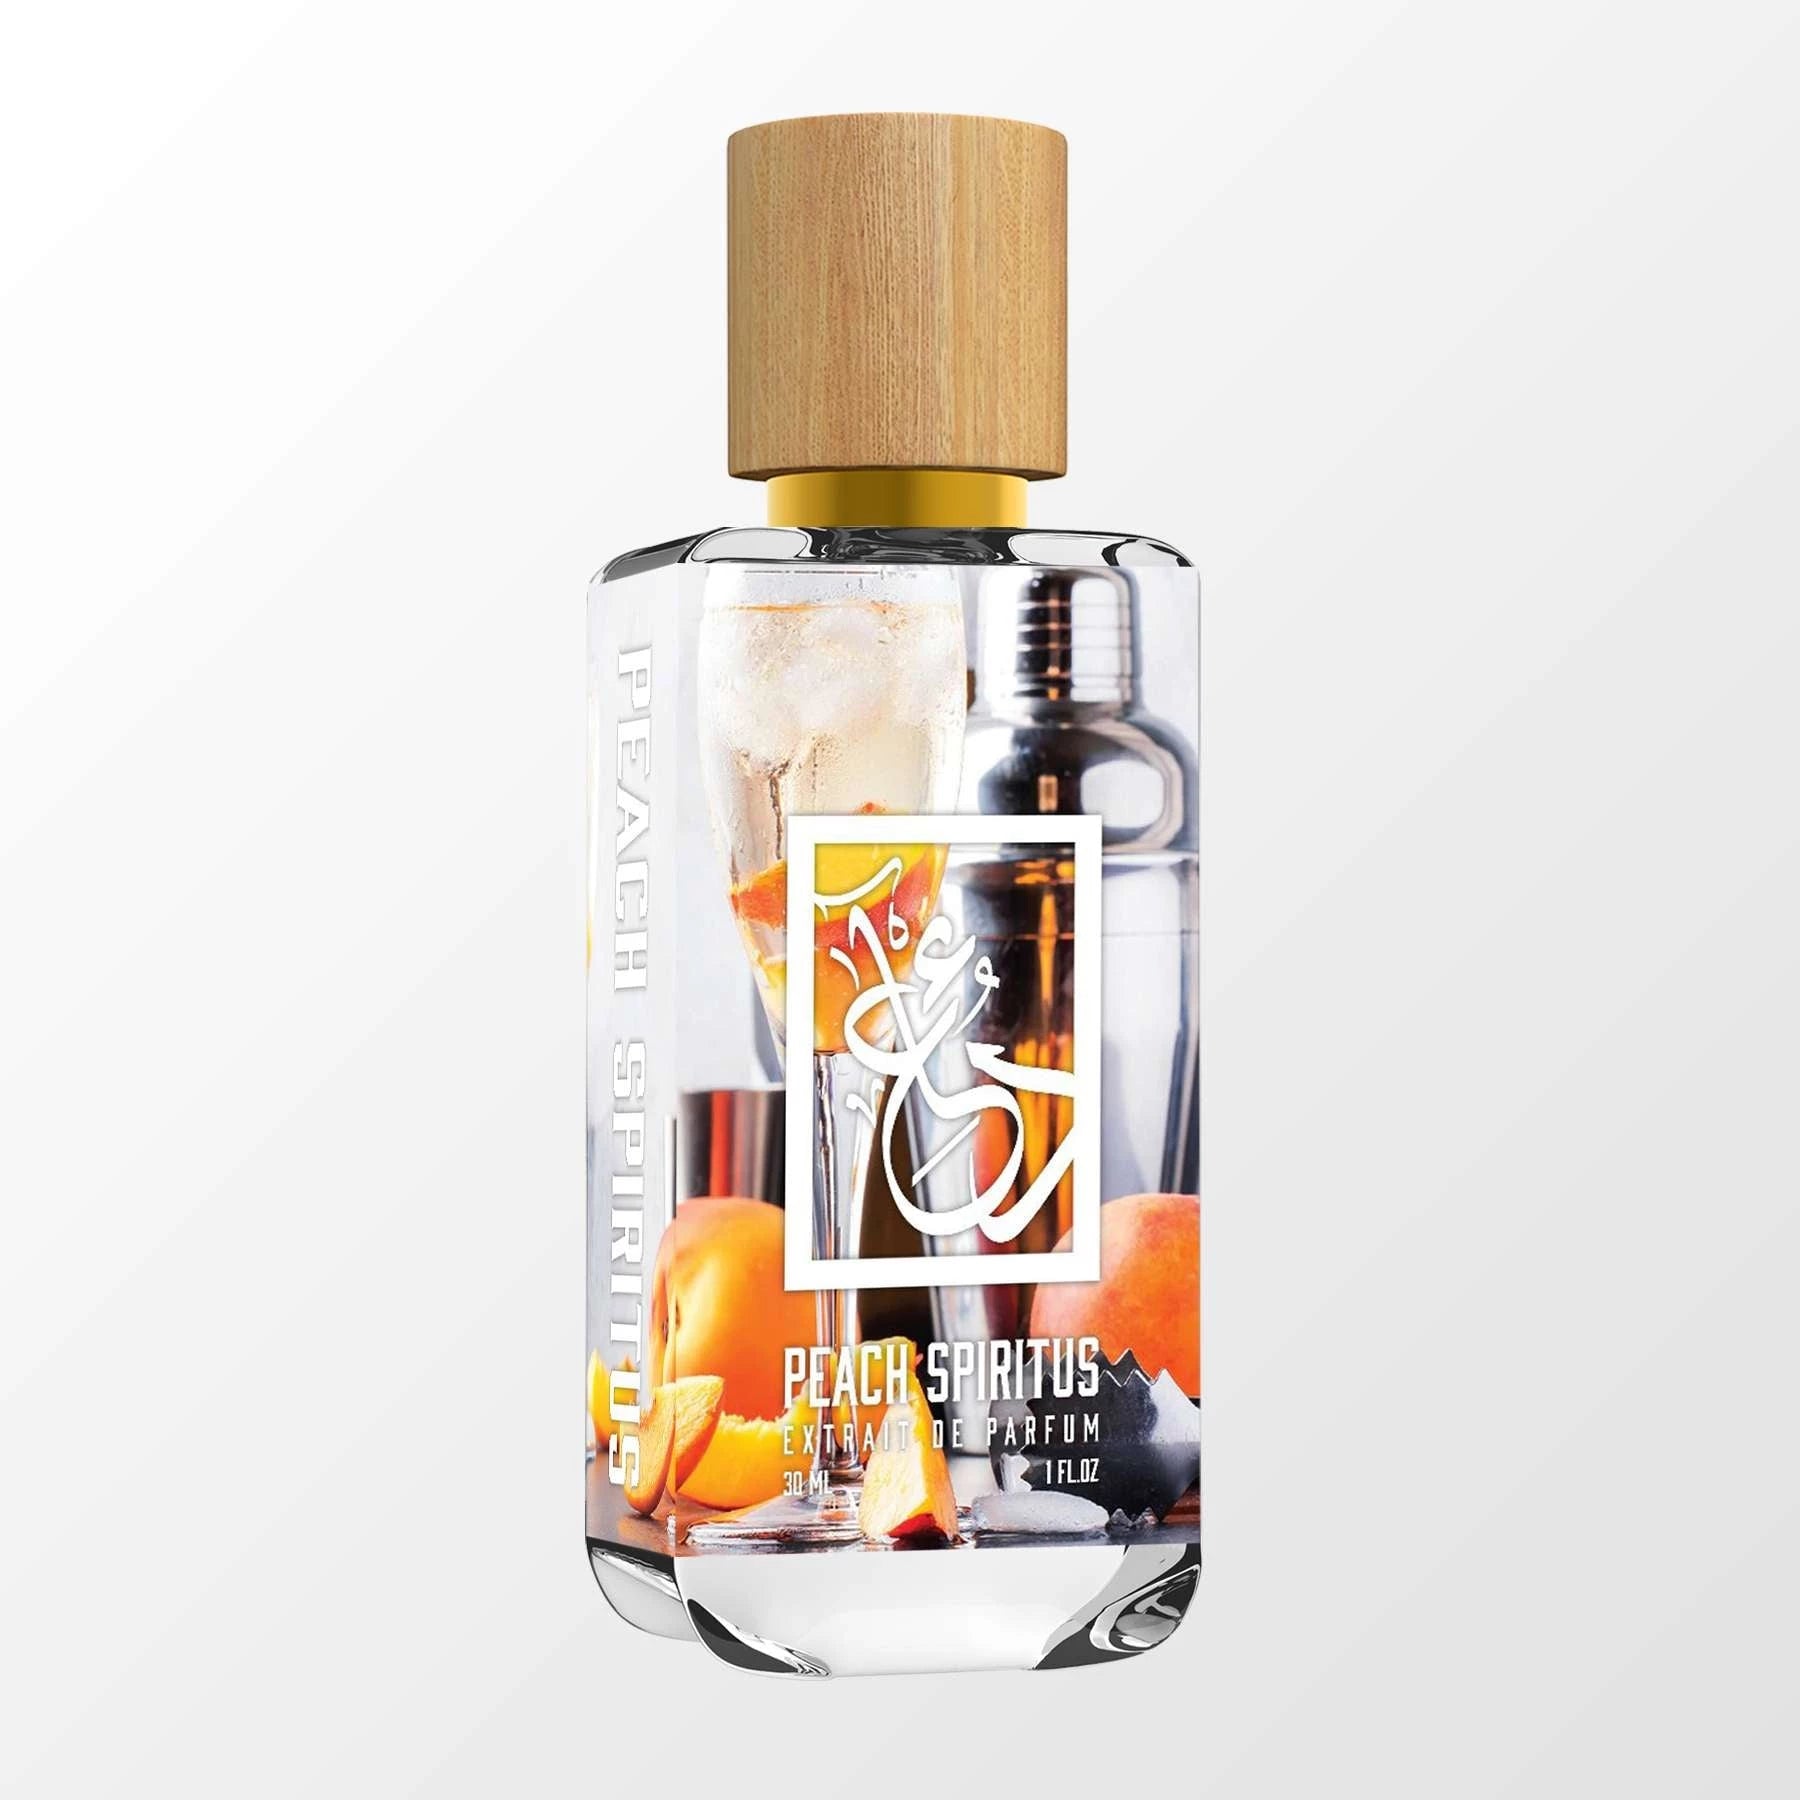 Peach Spiritus - DUA FRAGRANCES - Fruity Oriental - Unisex Perfume -  34ml/1.1 FL OZ - Extrait De Parfum